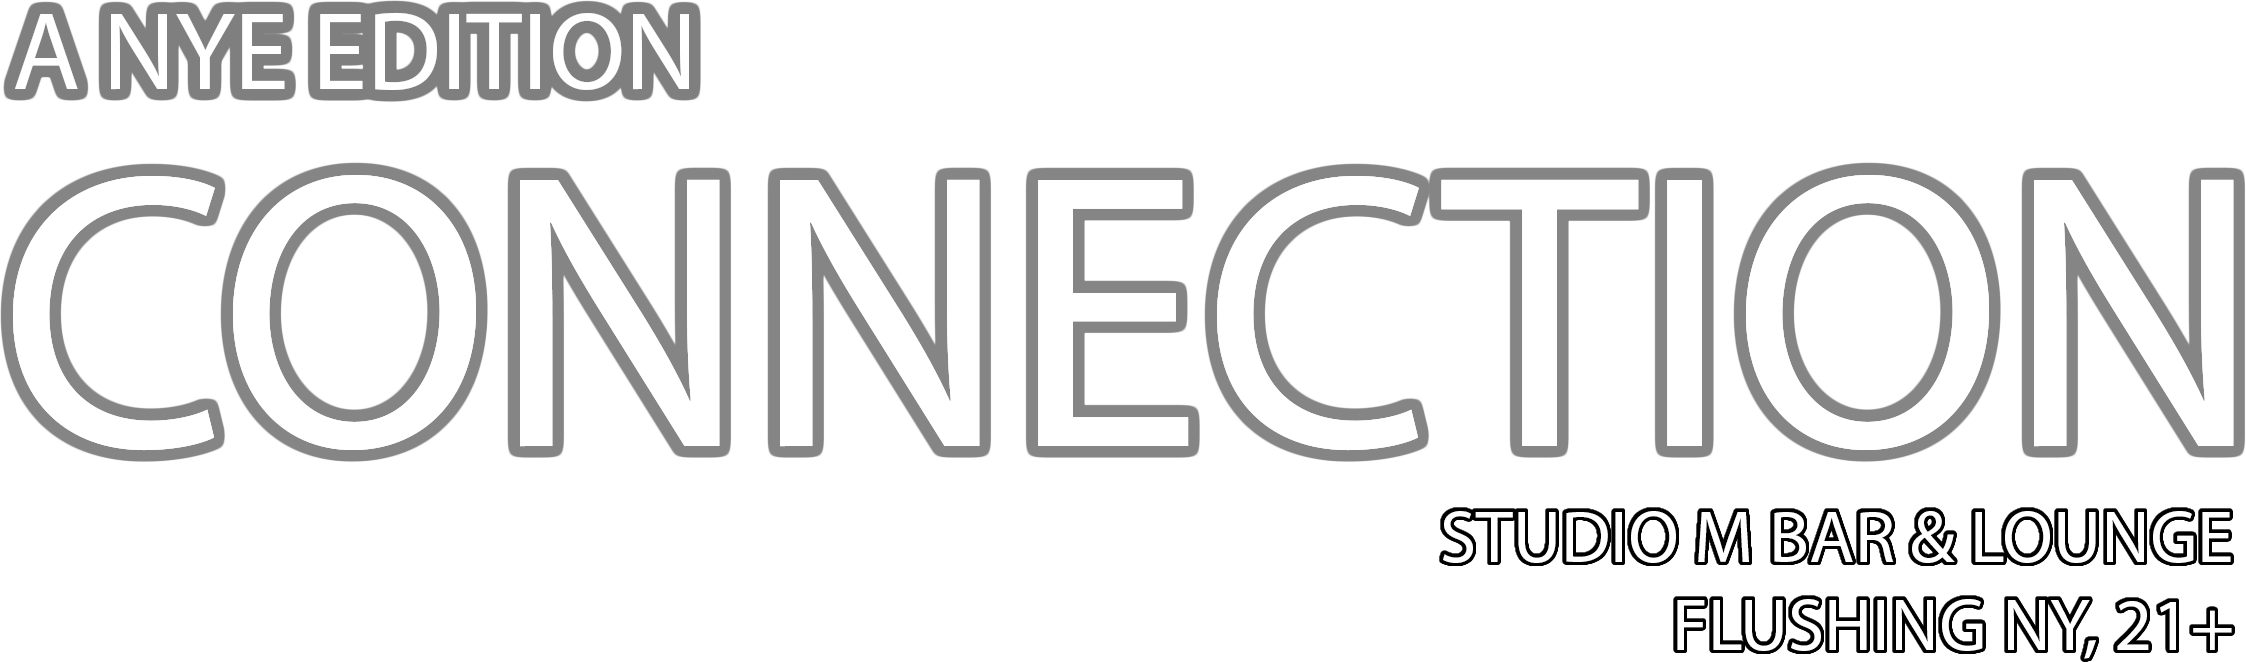 Connection: A NYE Edition - KyoTech - Website Design, Hosting, & Management